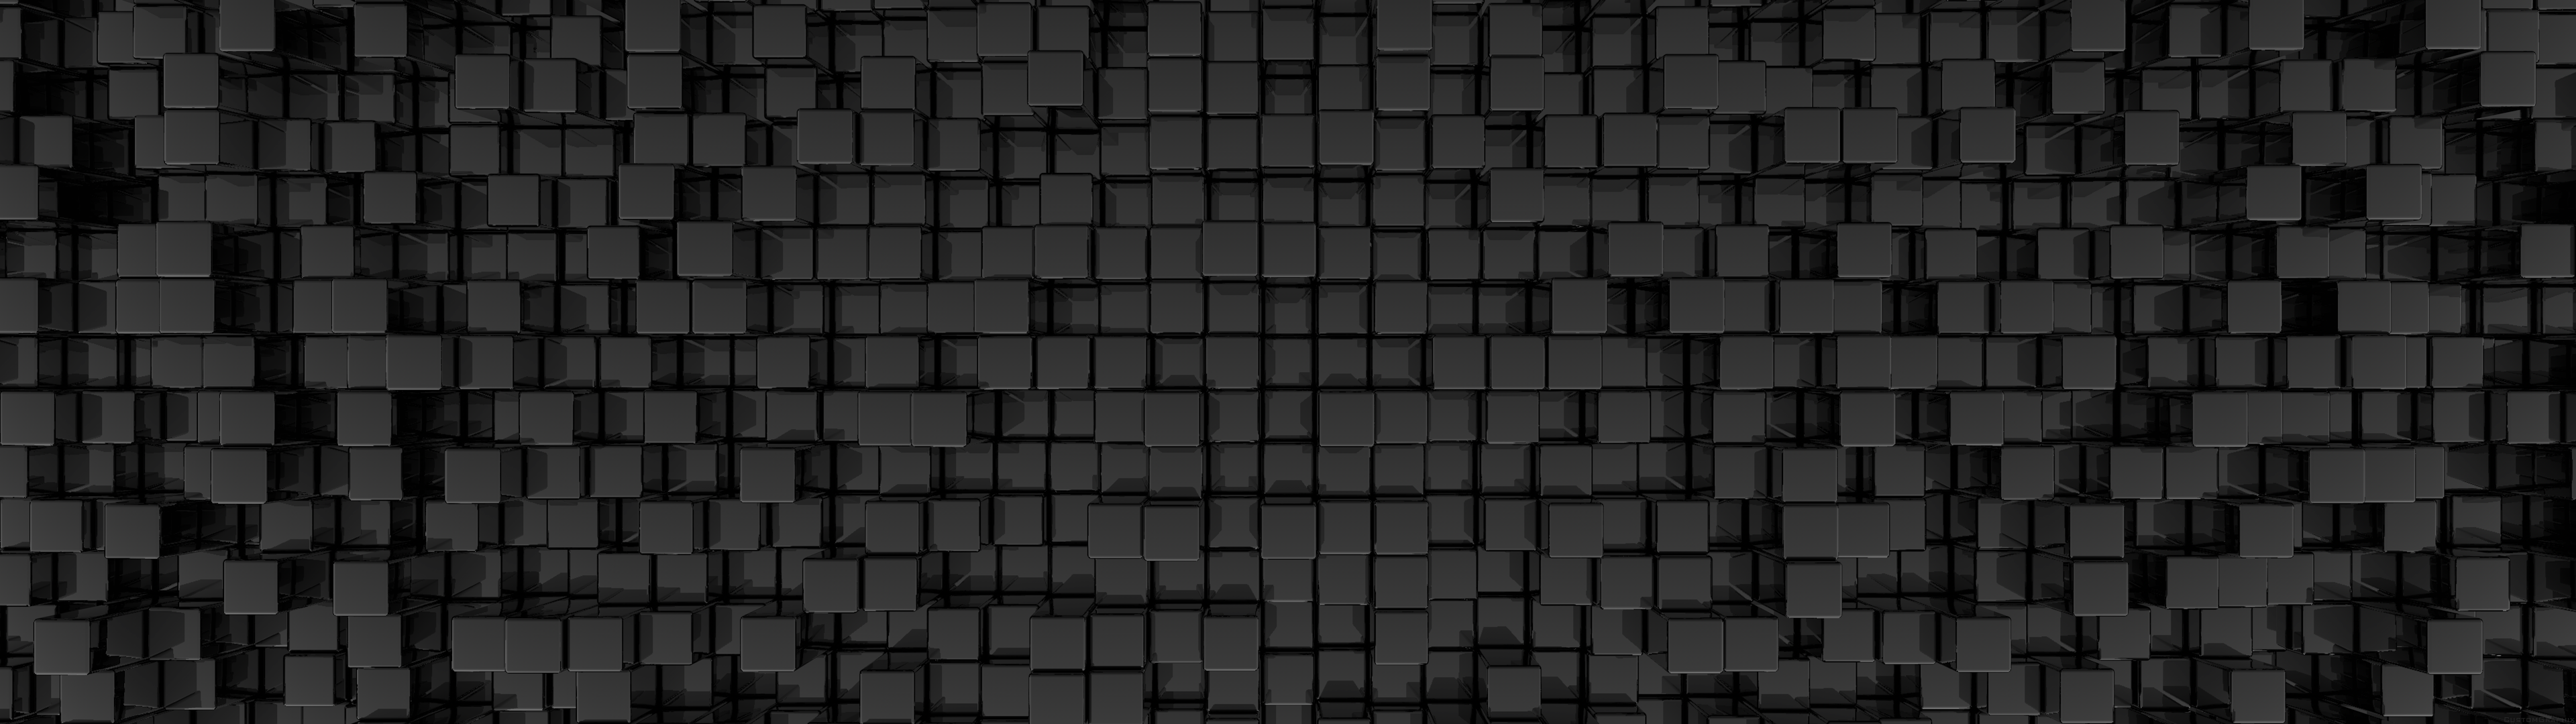 c4d abstract box wallpaper by xcustomgraphix customization wallpaper 3840x1080